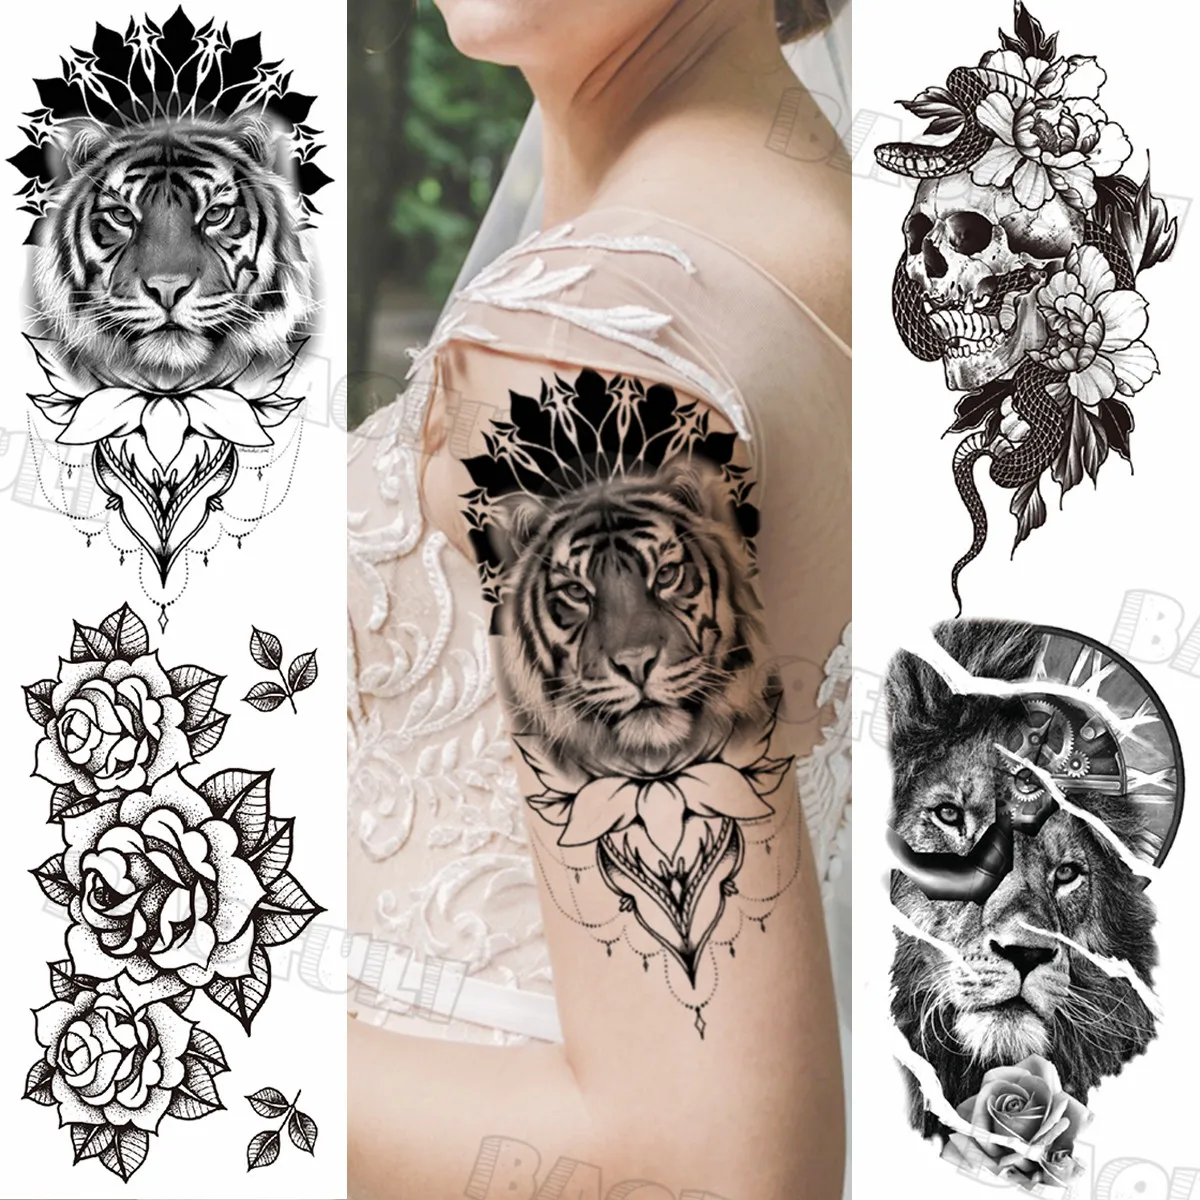 Chroma Tattoo - Lion tattoo by Cam Hubel @camhubeltattoos . . . . #tattoo # tattoos #ink #inked #liontattoo #metrodetroit #michigantattooartist  #mitten_made_tattoos | Facebook